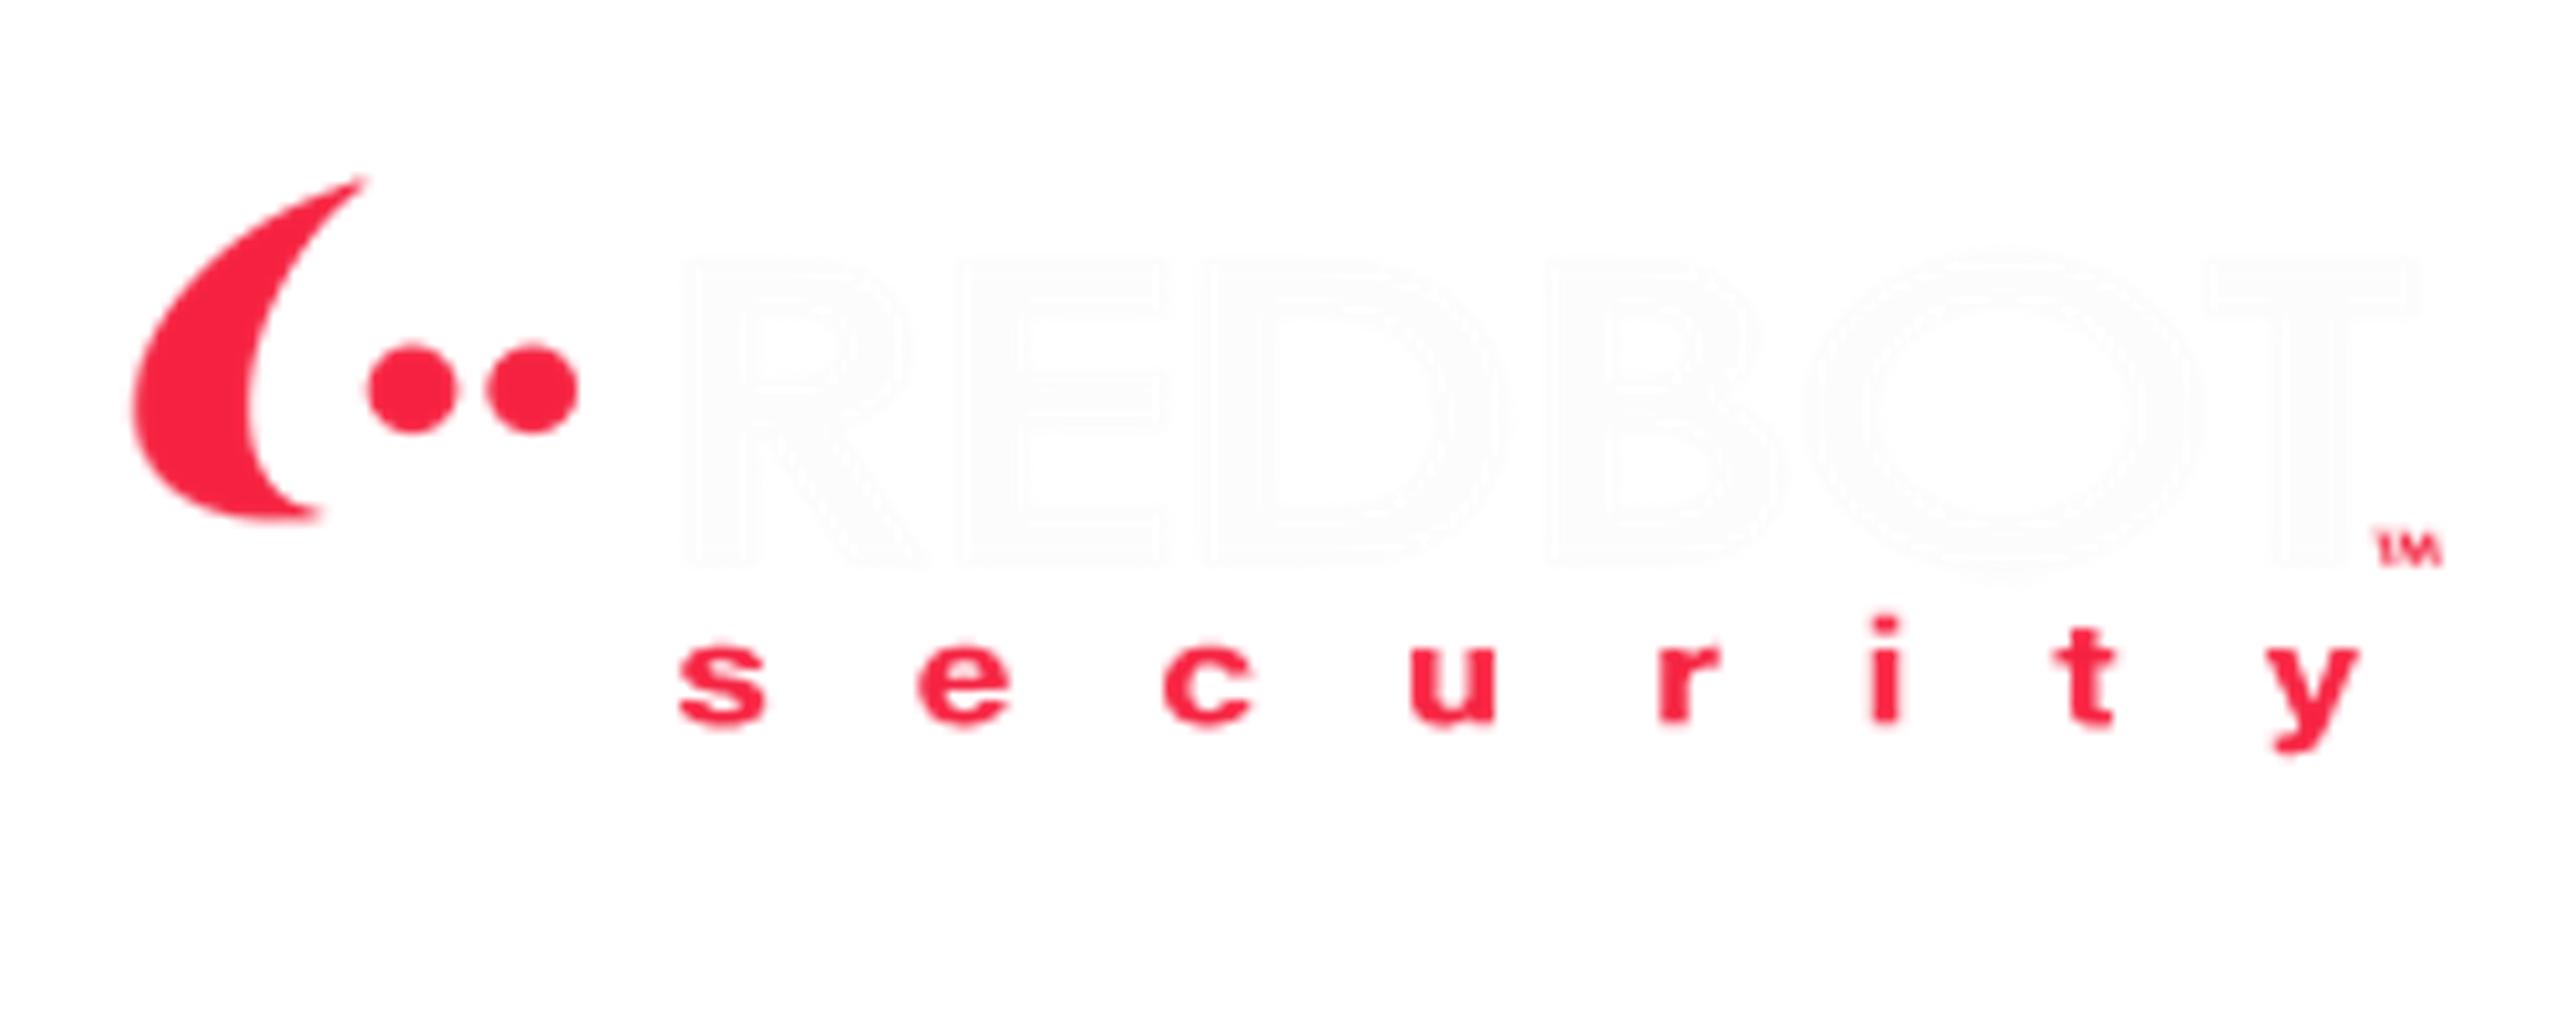 Redbot Security